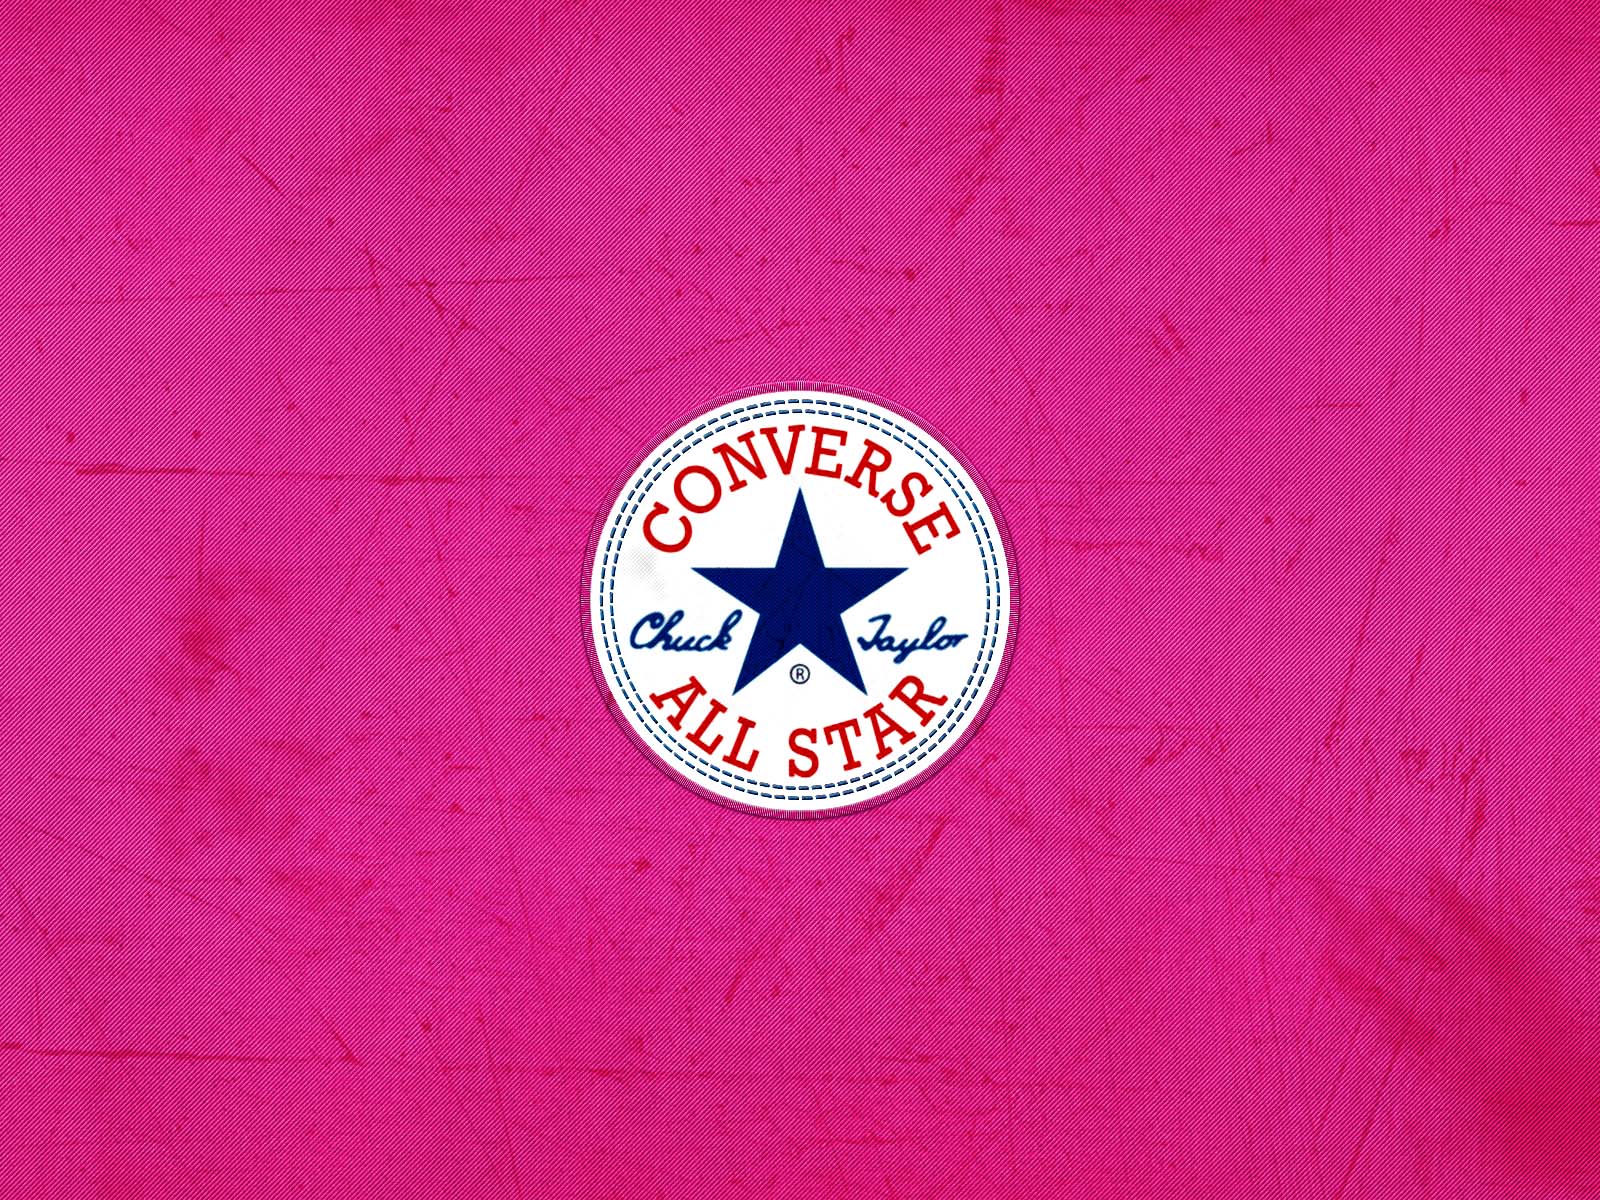 Converse All Star HD Logo Wallpaper In